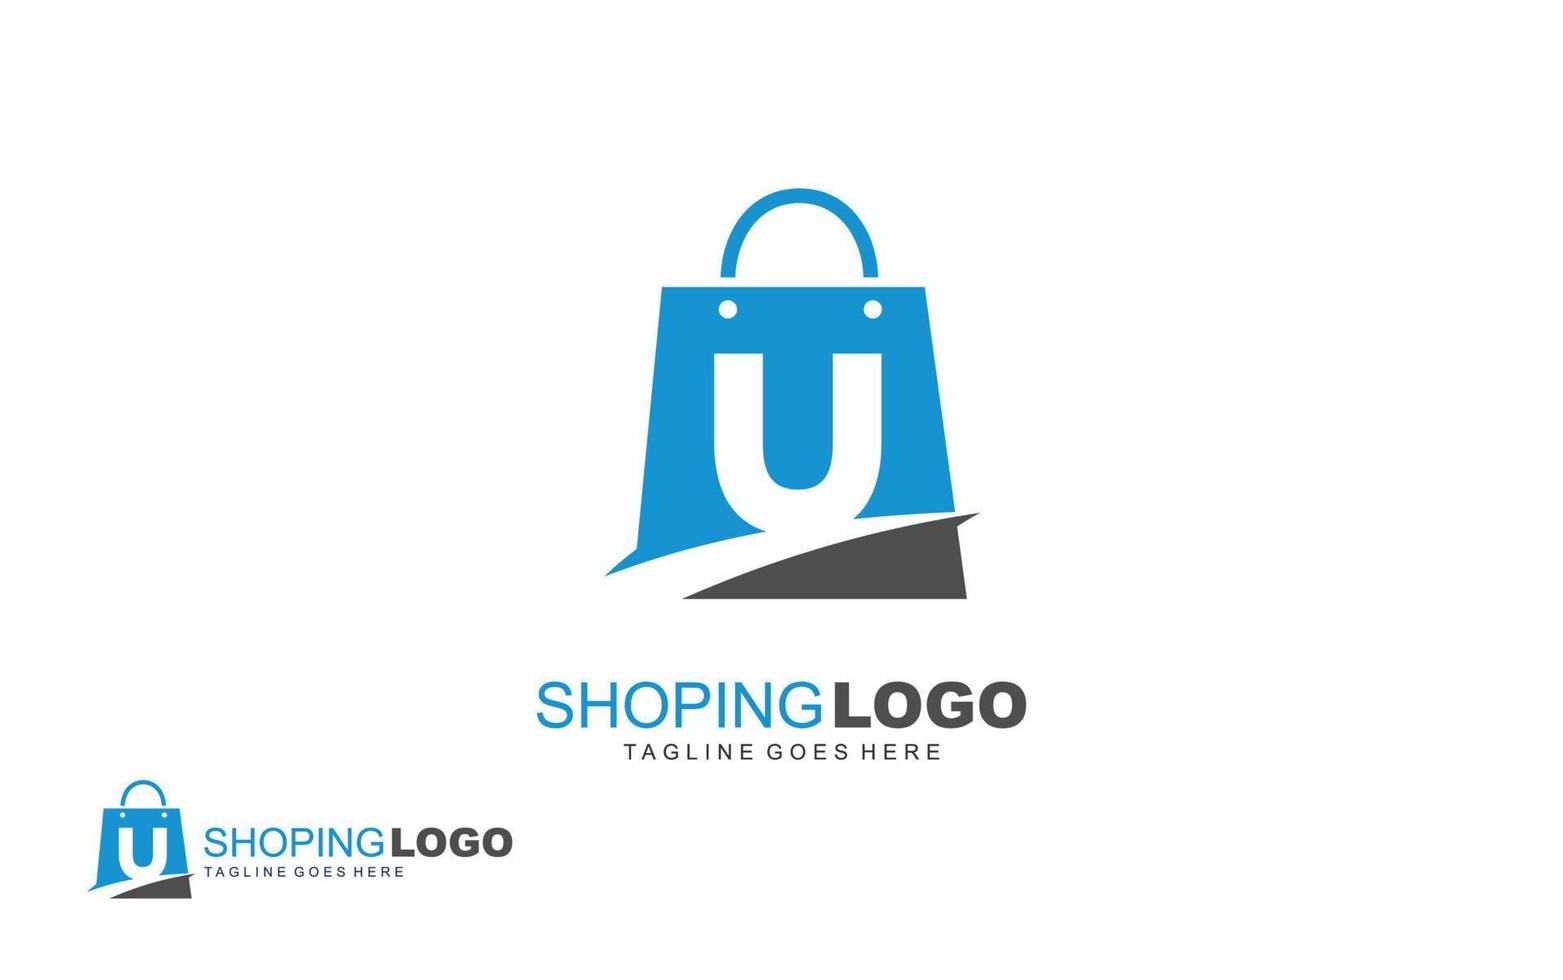 U logo ONLINESHOP for branding company. BAG template vector illustration for your brand.